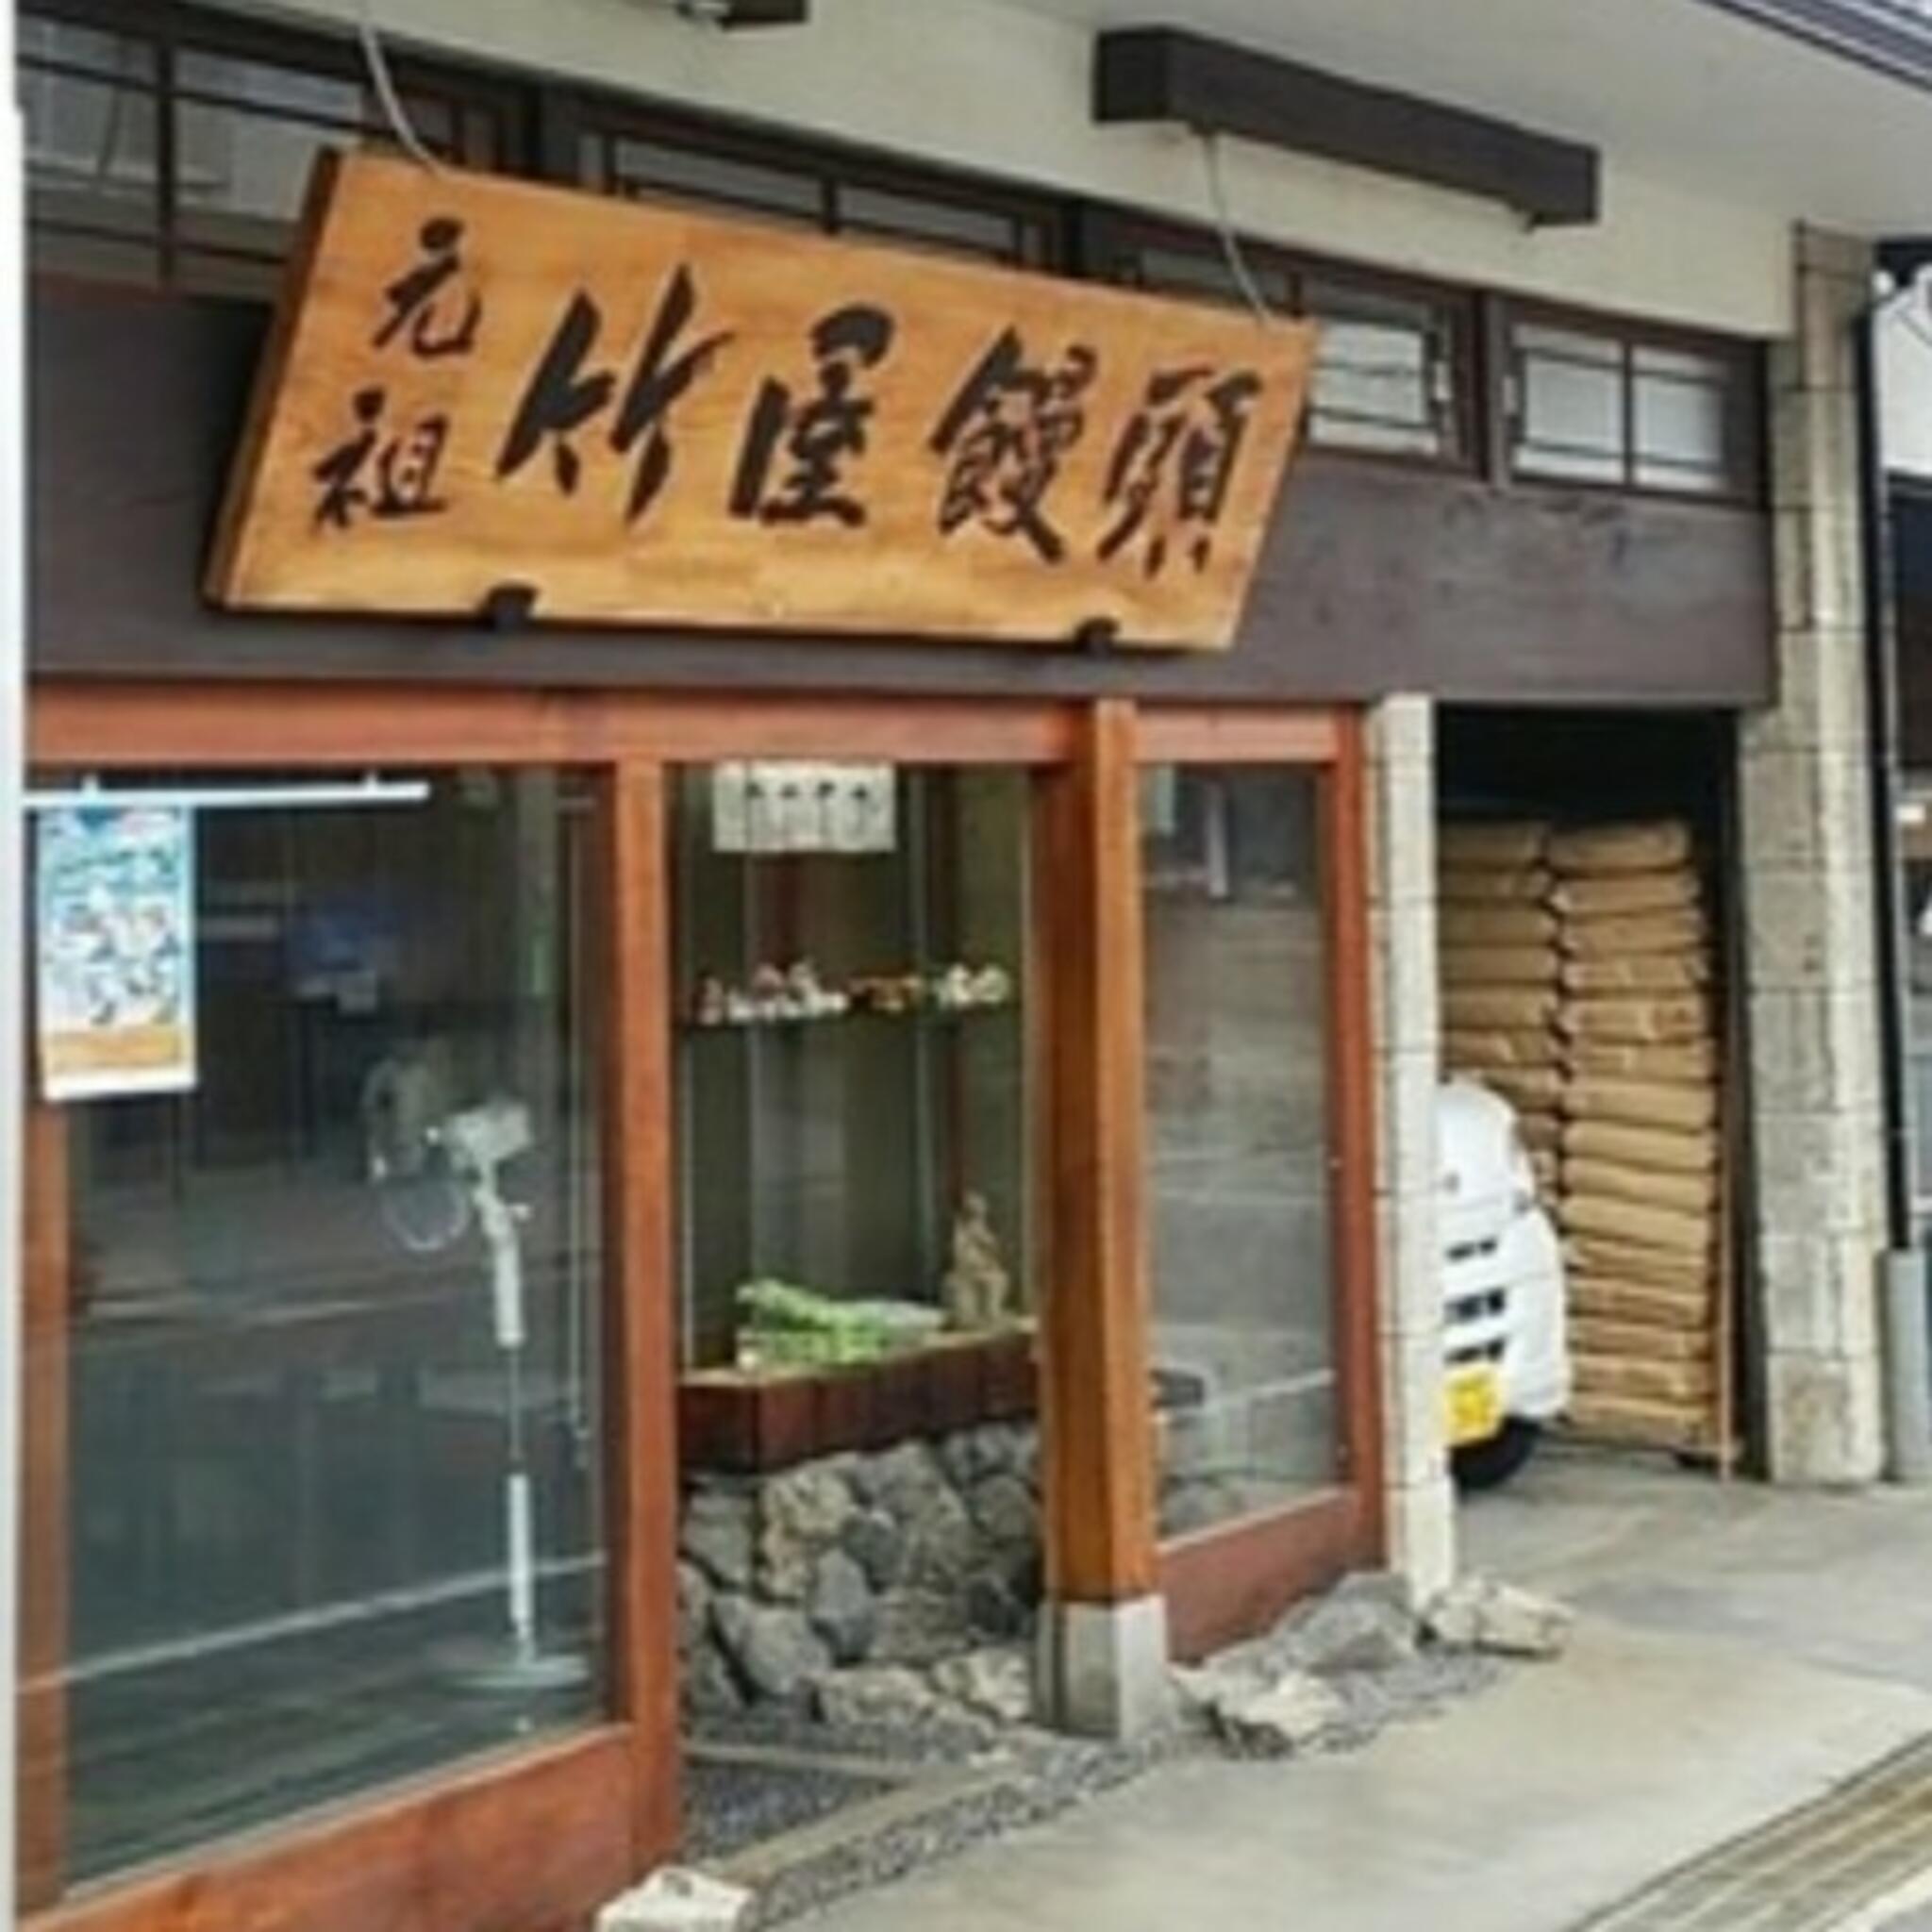 竹屋饅頭本舗の代表写真2